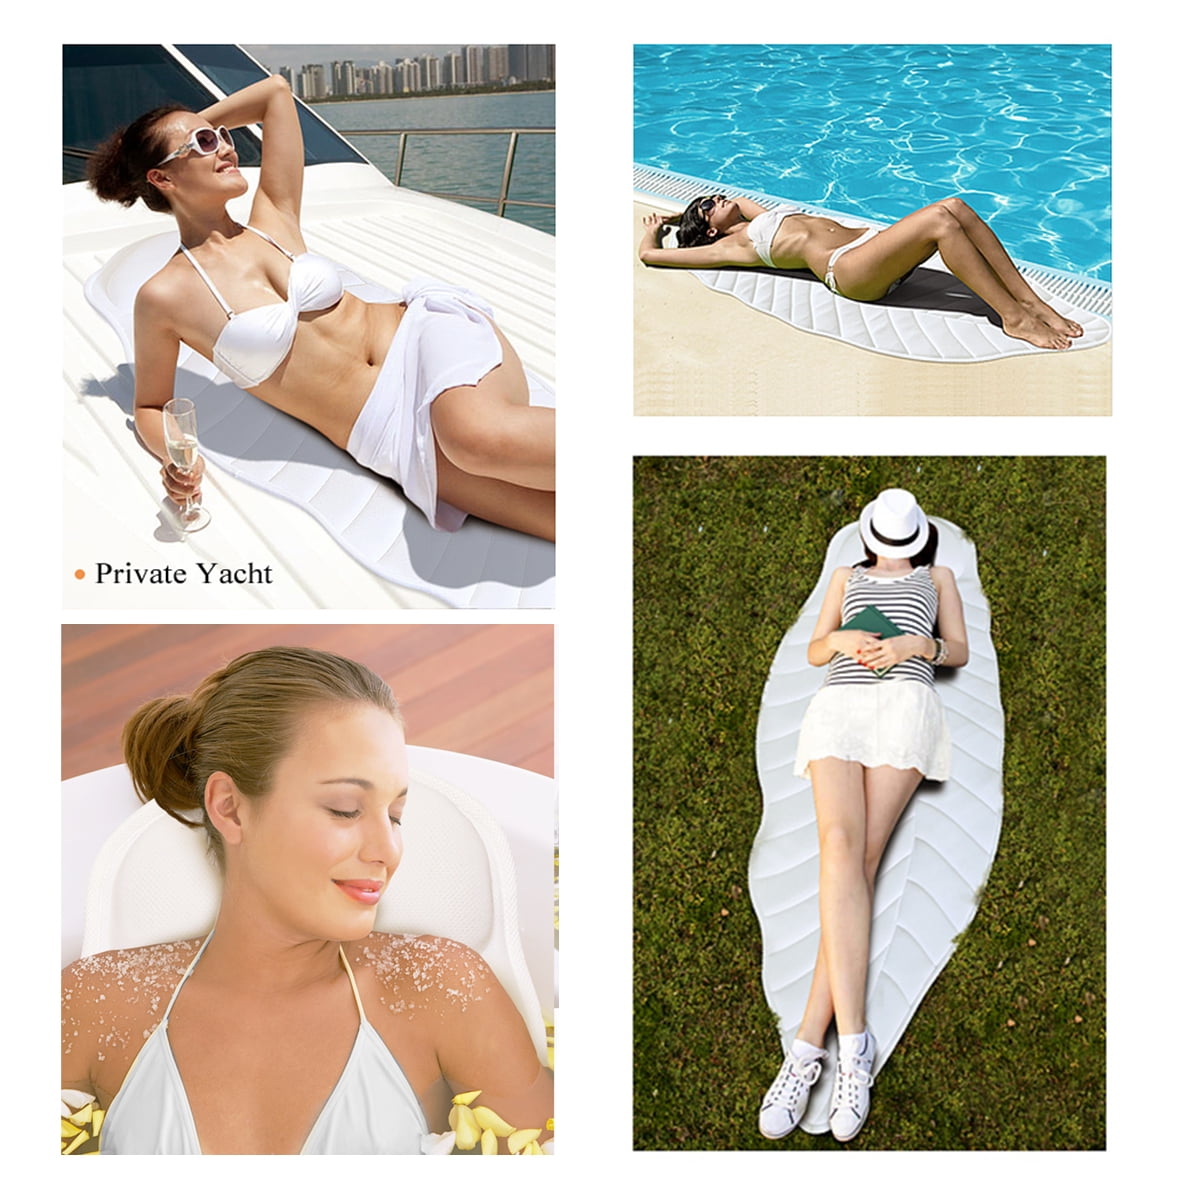  Full Body Spa Bath Pillow Mat, Bathtub Mattress Luxury